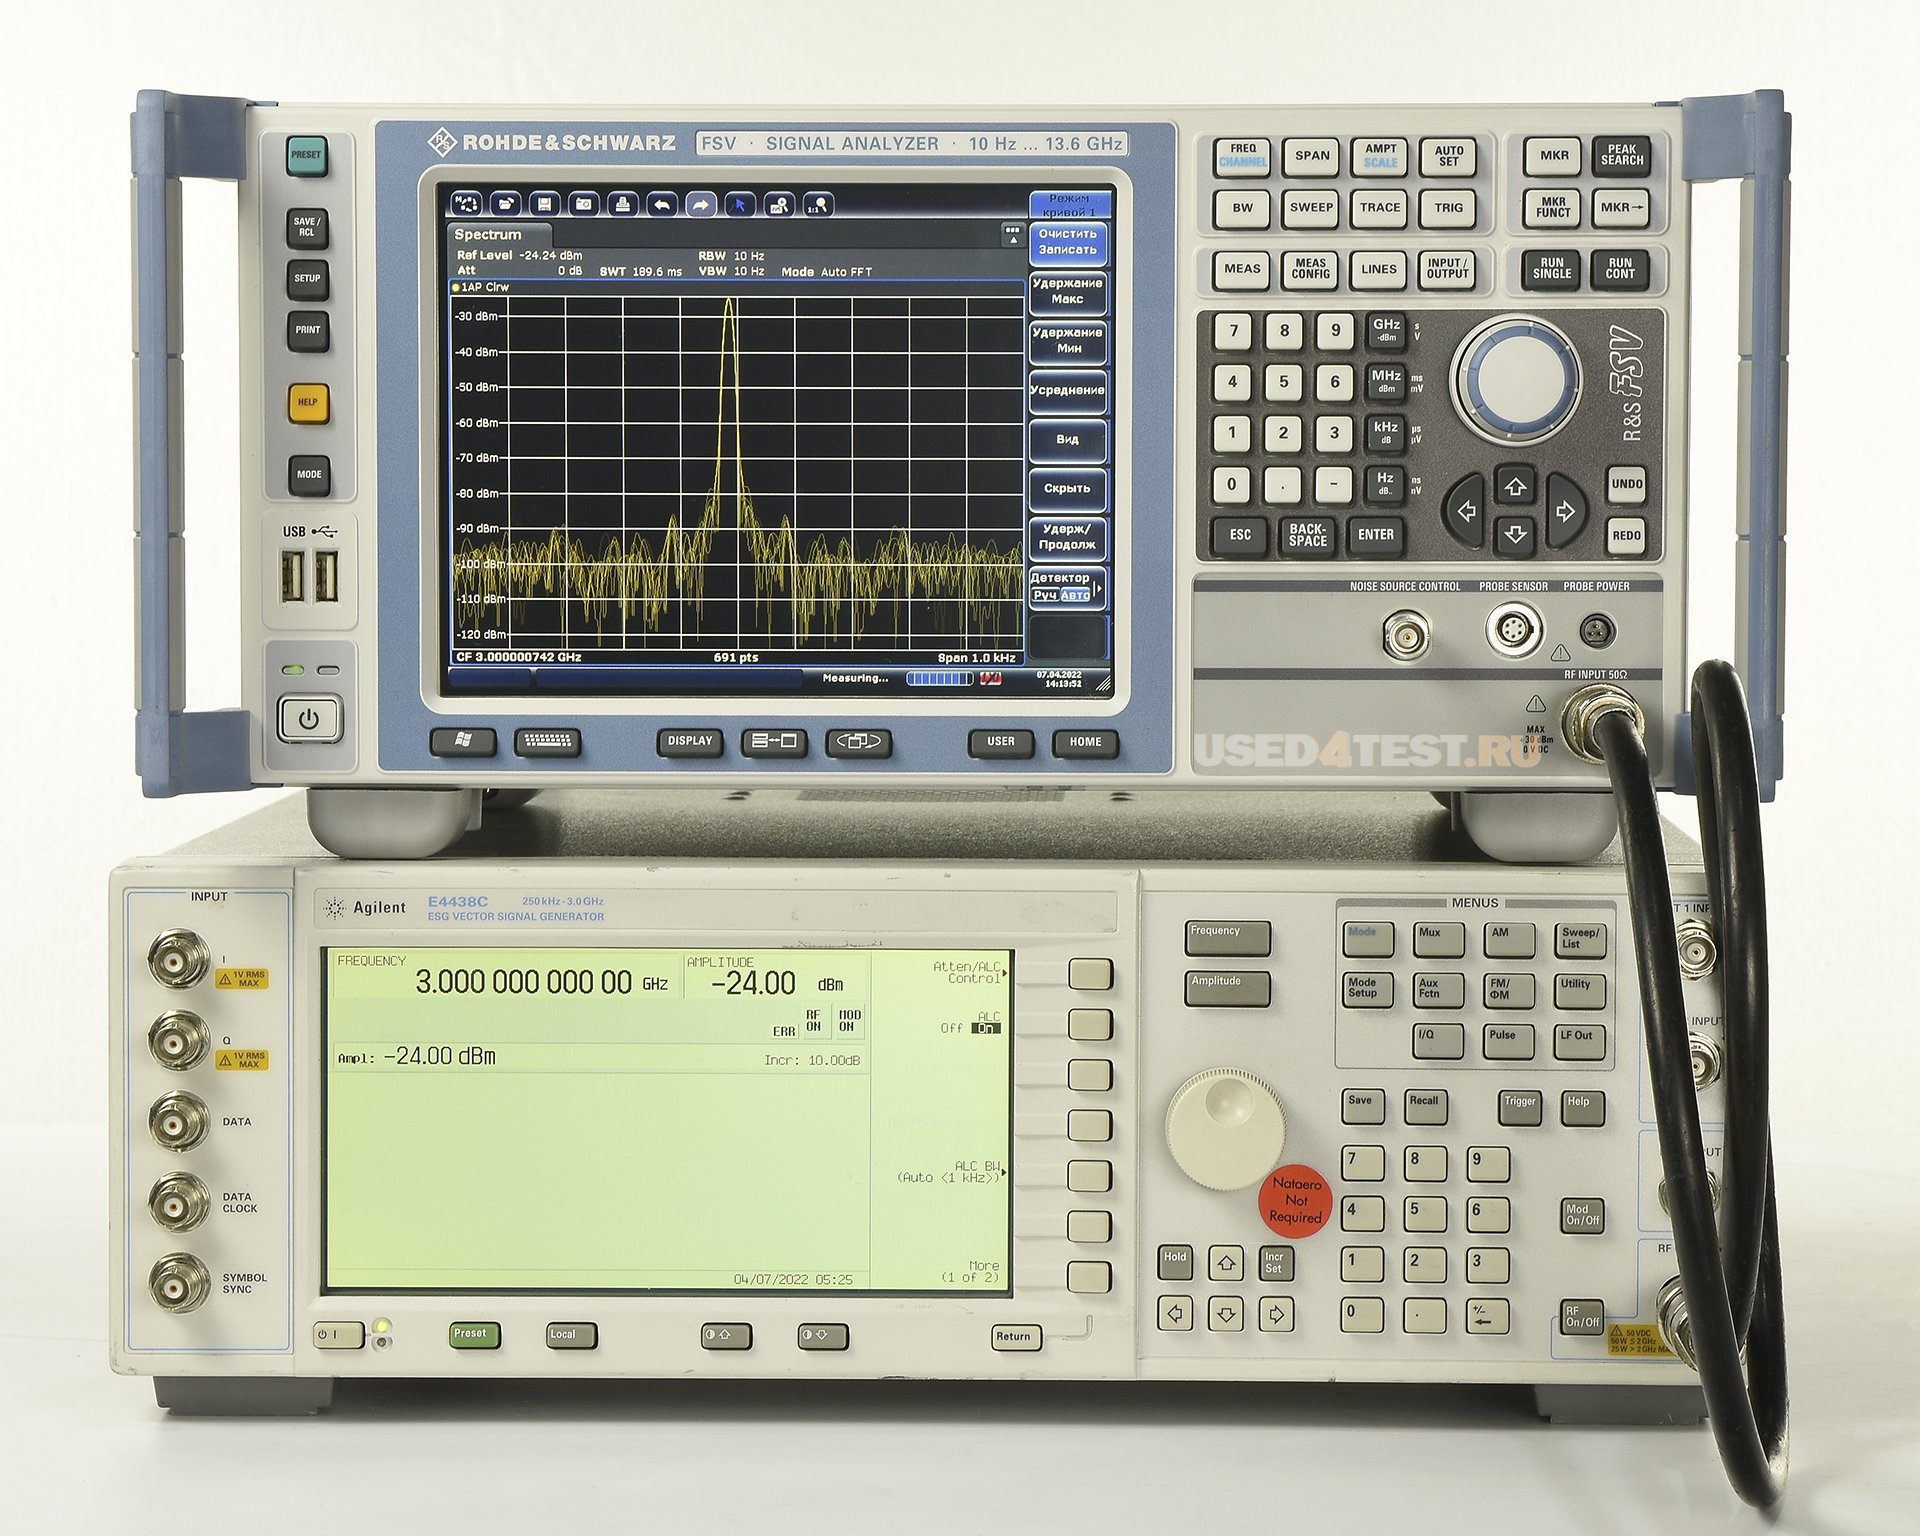 Анализатор спектра и сигналов
 Rohde&Schwarz FSV13
 с диапазоном частот от 10 Гц до 13,6 ГГц


 Дополнительные опции по запросу:

FSV-B22 — RF preamplifier, 9 kHz to 7 GHz
	FSV-B25 — Electronic attenuator, 1 dB steps
FSV-B29 — Frequency Range Extension to 20 Hz
	FSV-B70 — 40 MHz analysis bandwidth
FSV-K7 - Analog Modulation Analysis for AM, FM, φM
FSV-K14 - Spectrogram Measurements
FSV-K30 - Noise Figure and Gain Measurements
FSV-K40 - Phase Noise Measurement Application
FSV-K70 - Vector Signal Analysis

 Стоимость указана в Рублях DDP Москва по безналичному расчету включая НДС 20%
